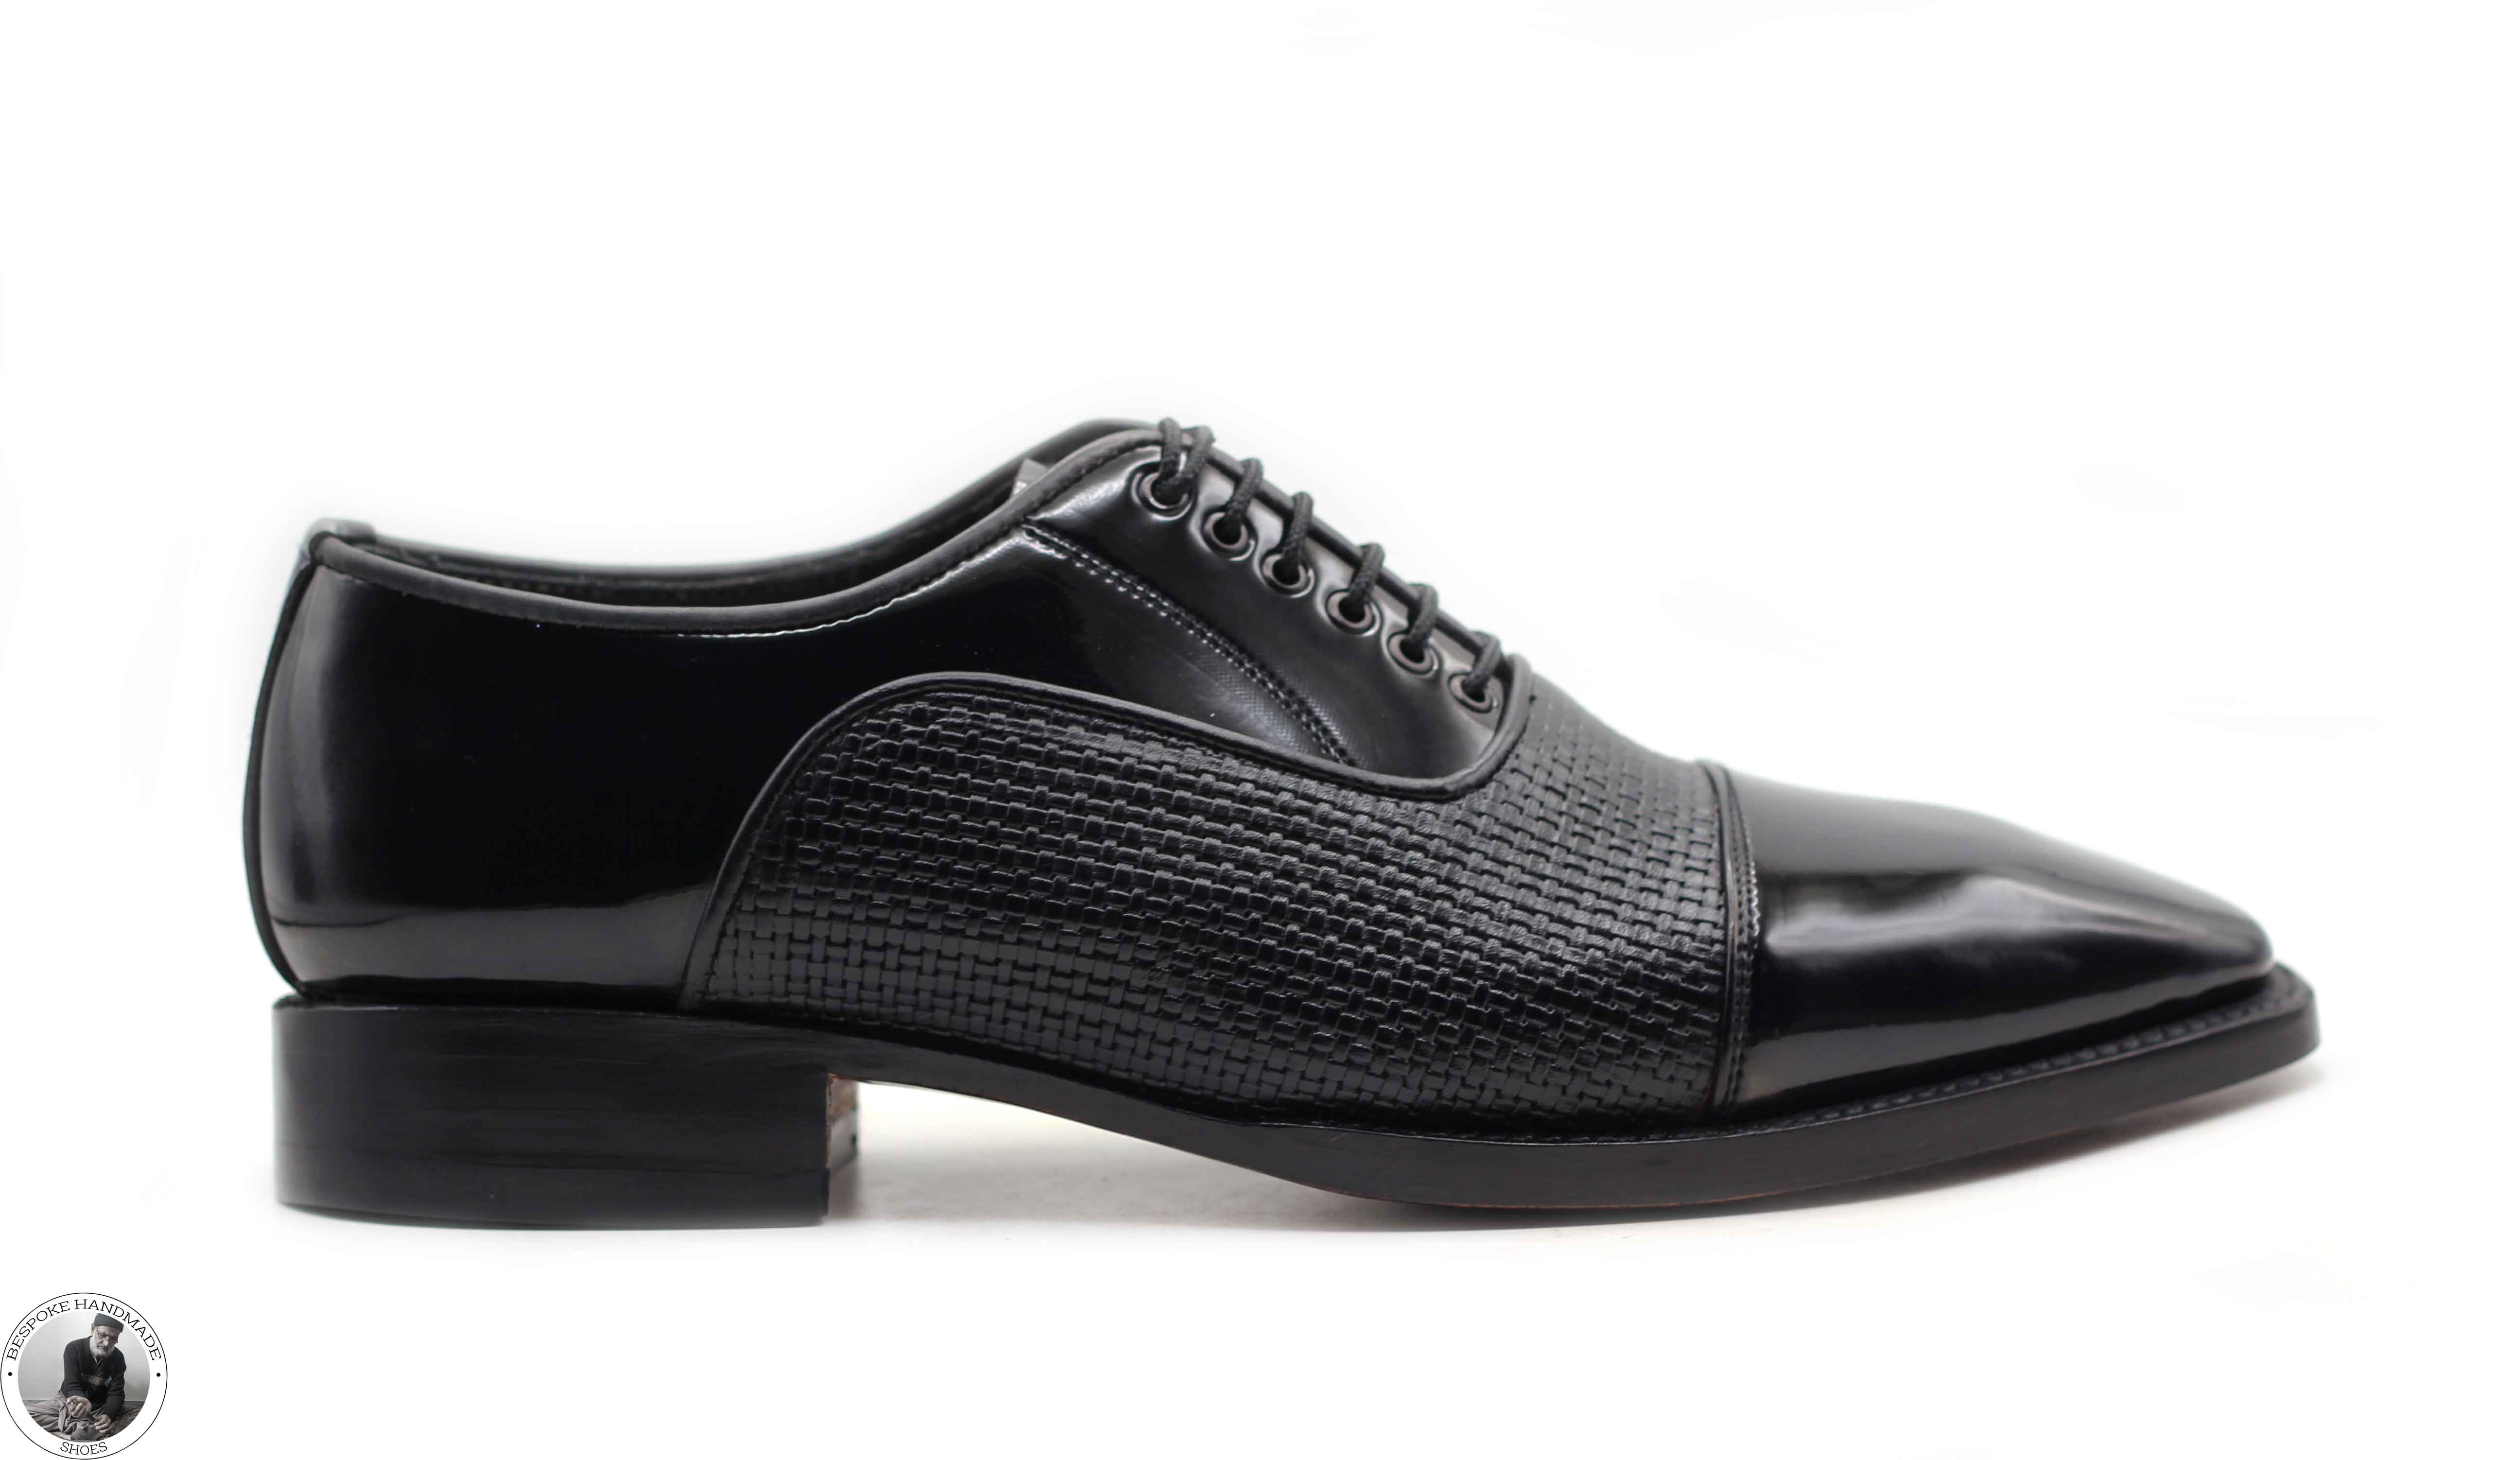 New Men's Handmade Black Leather Animal Print Oxford Toe Cap Patent Dress Shoes For Men's